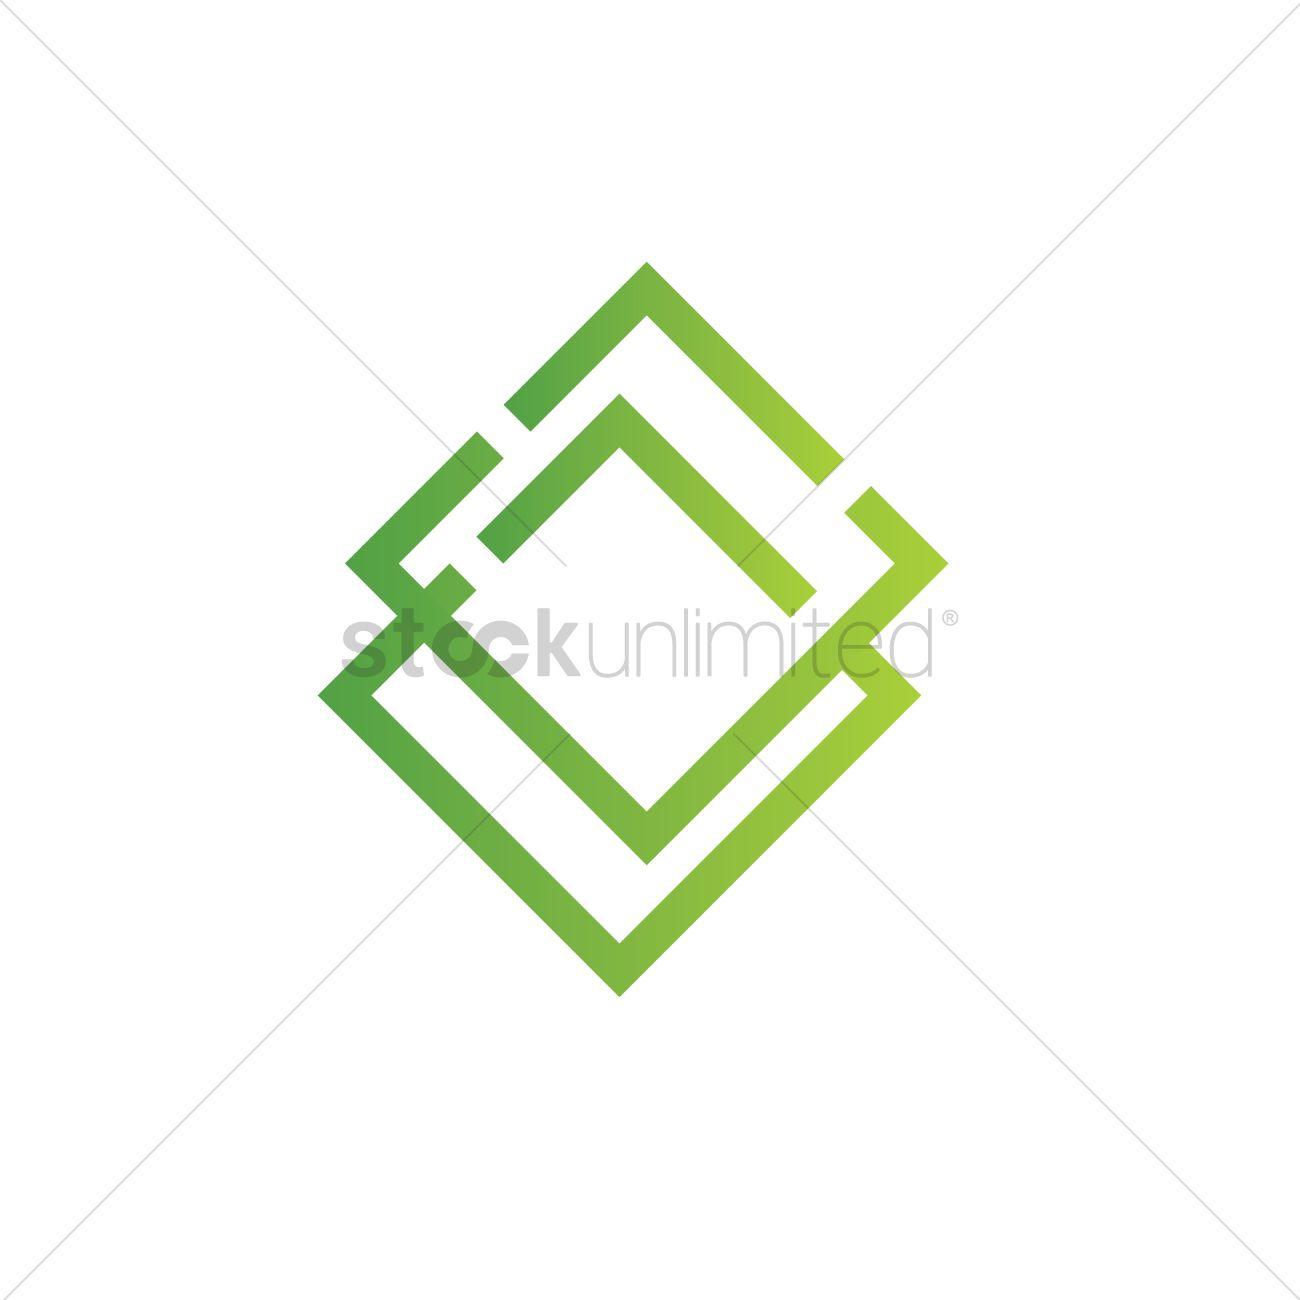 Rhombus Logo - Rhombus logo element Vector Image